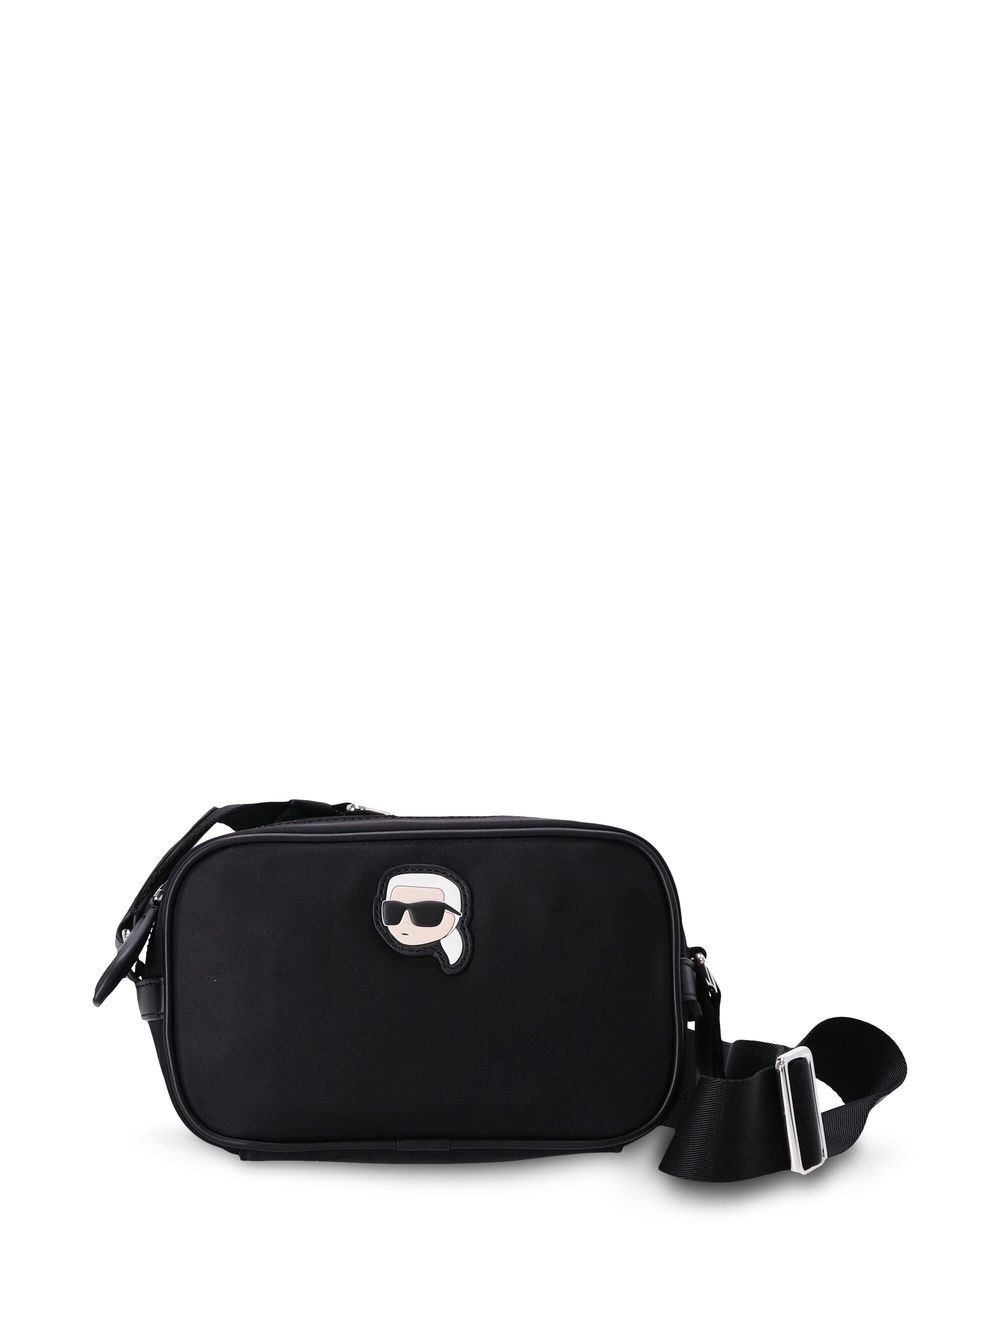 Image 1 of Karl Lagerfeld Ikonik camera bag